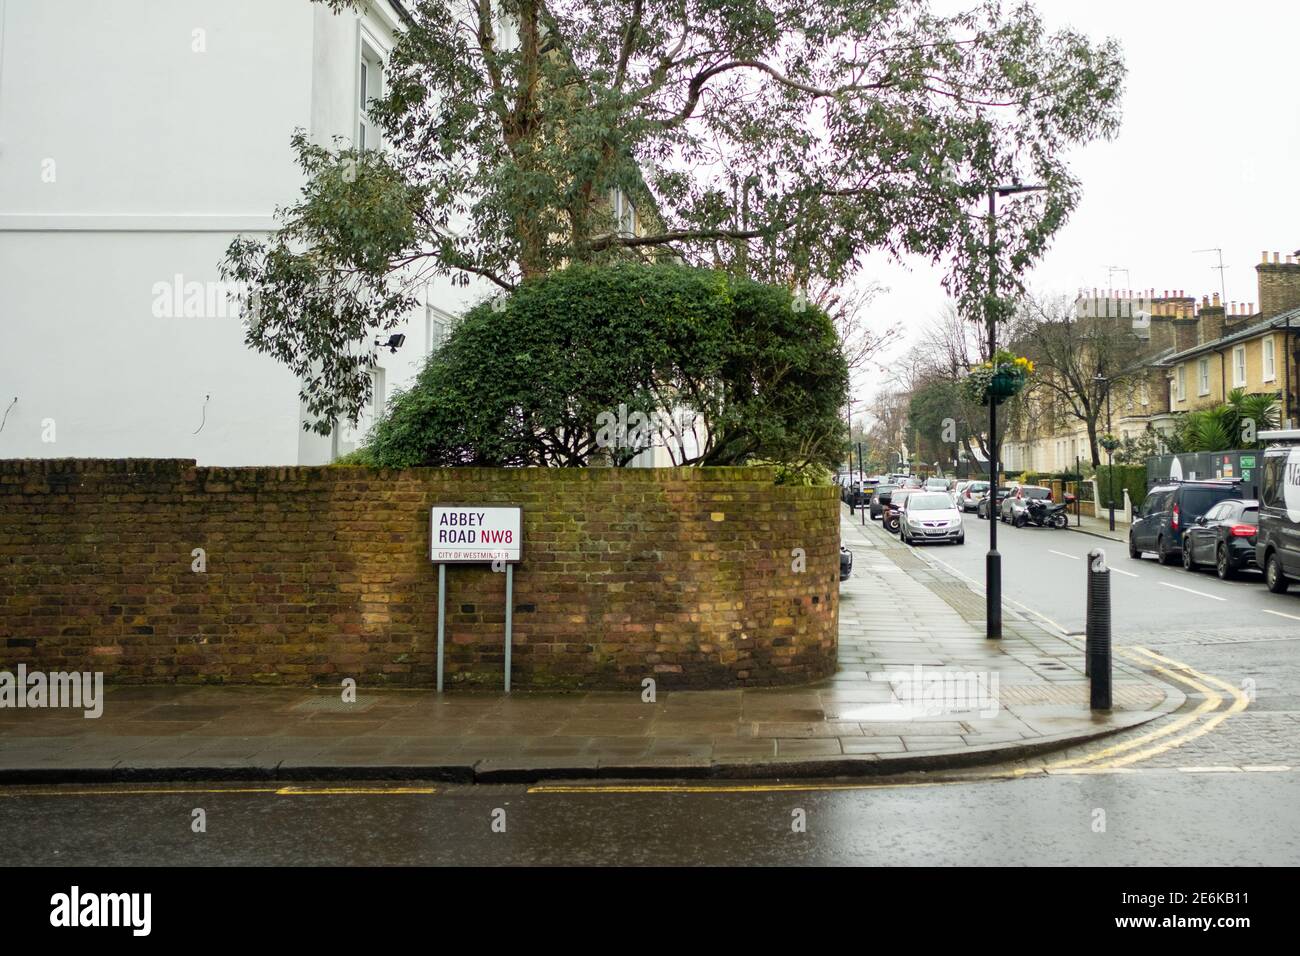 London - Abbey Road Straßenschild, eine berühmte Straße im Nordwesten Londons Stockfoto